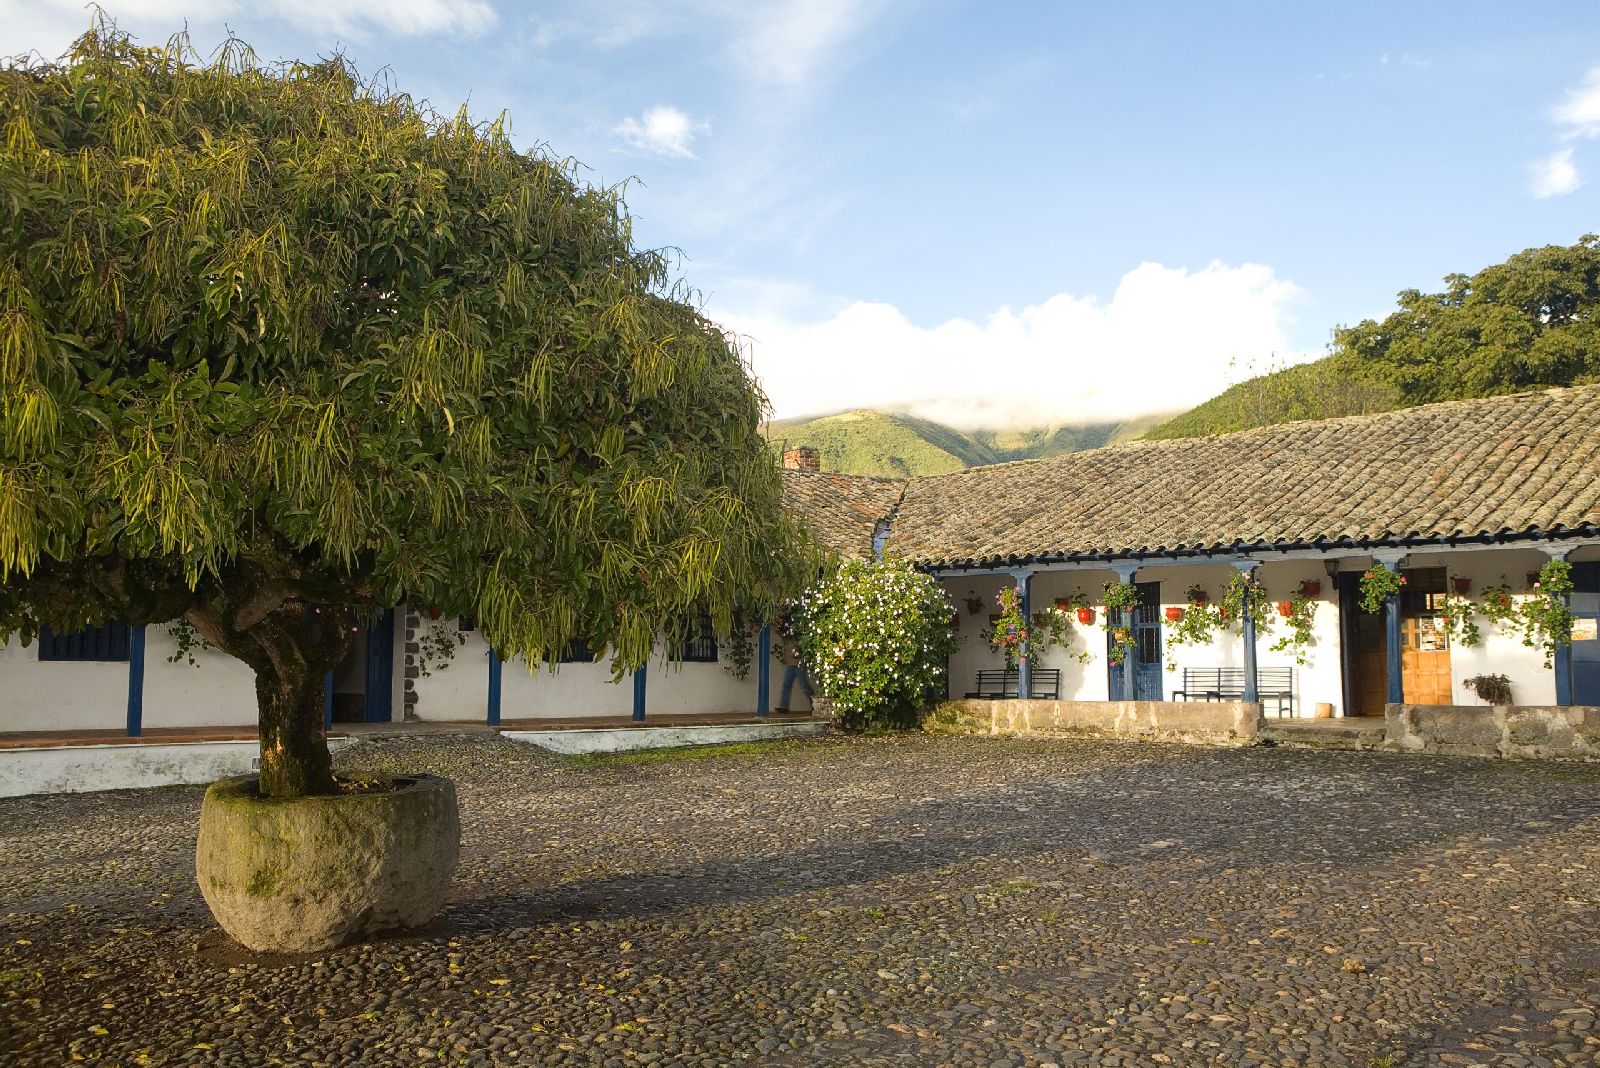 The courtyard of Hacienda Zuleta in the highlands of Ecuador